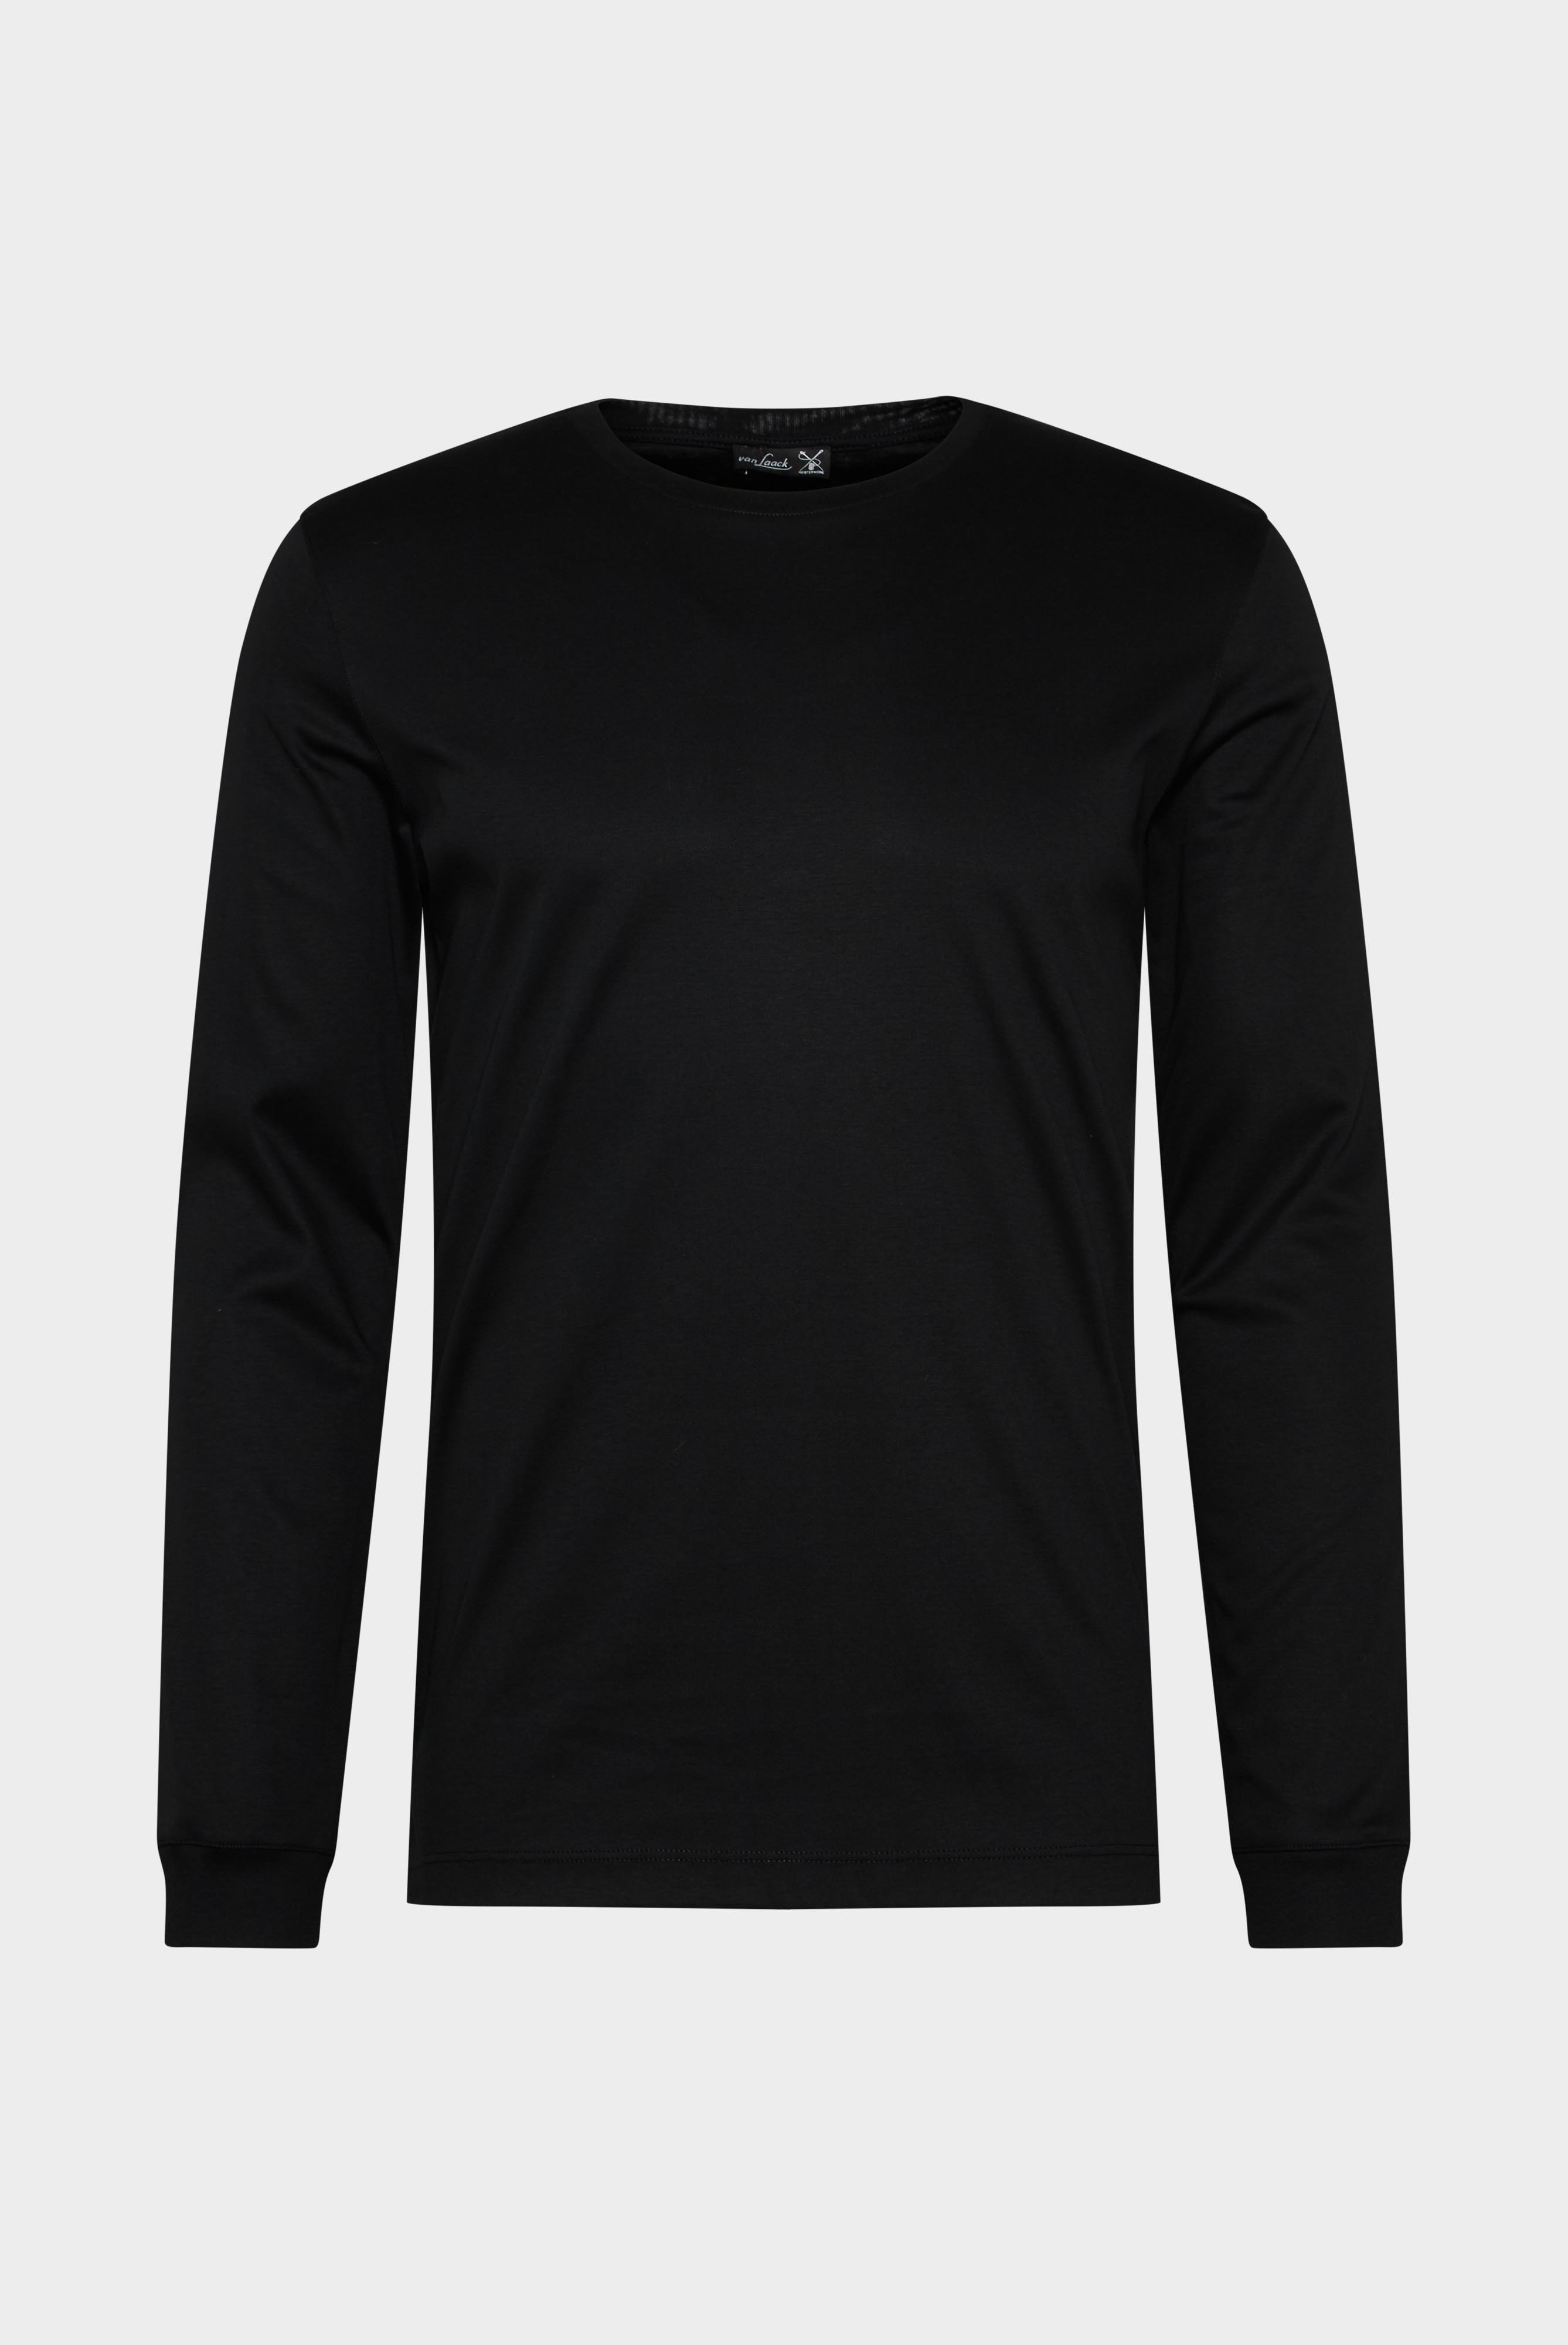 T-Shirts+Langarm Jersey T-Shirt mit Rundhals Slim Fit+20.1718.UX.180031.099.L